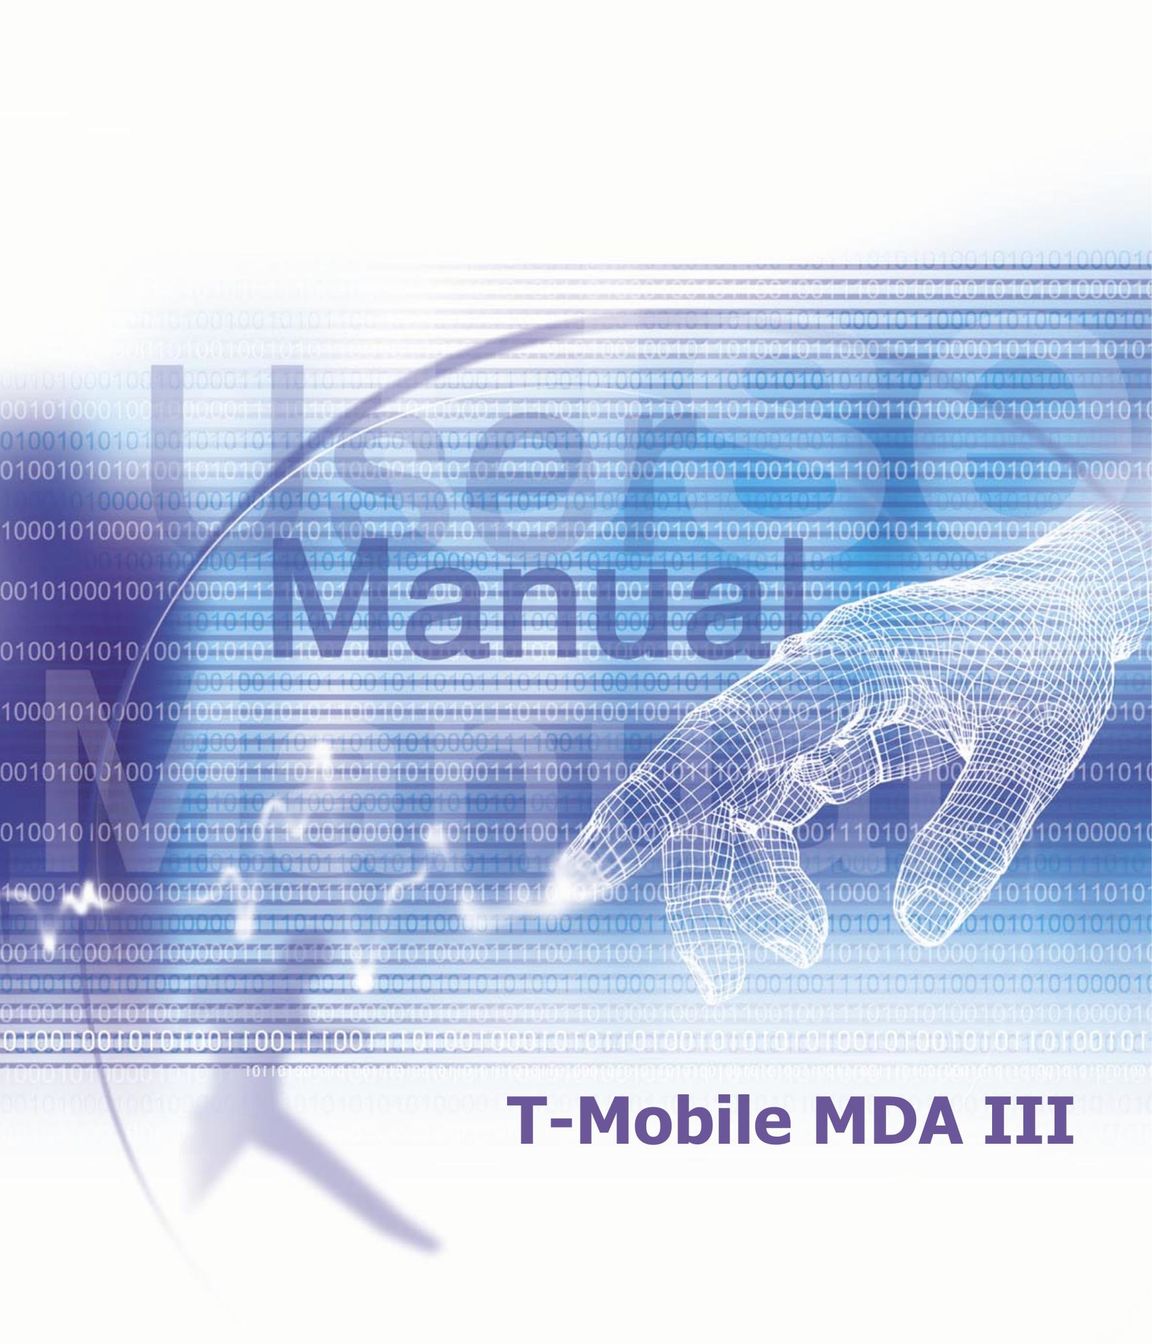 T-Mobile MDA III Cell Phone User Manual